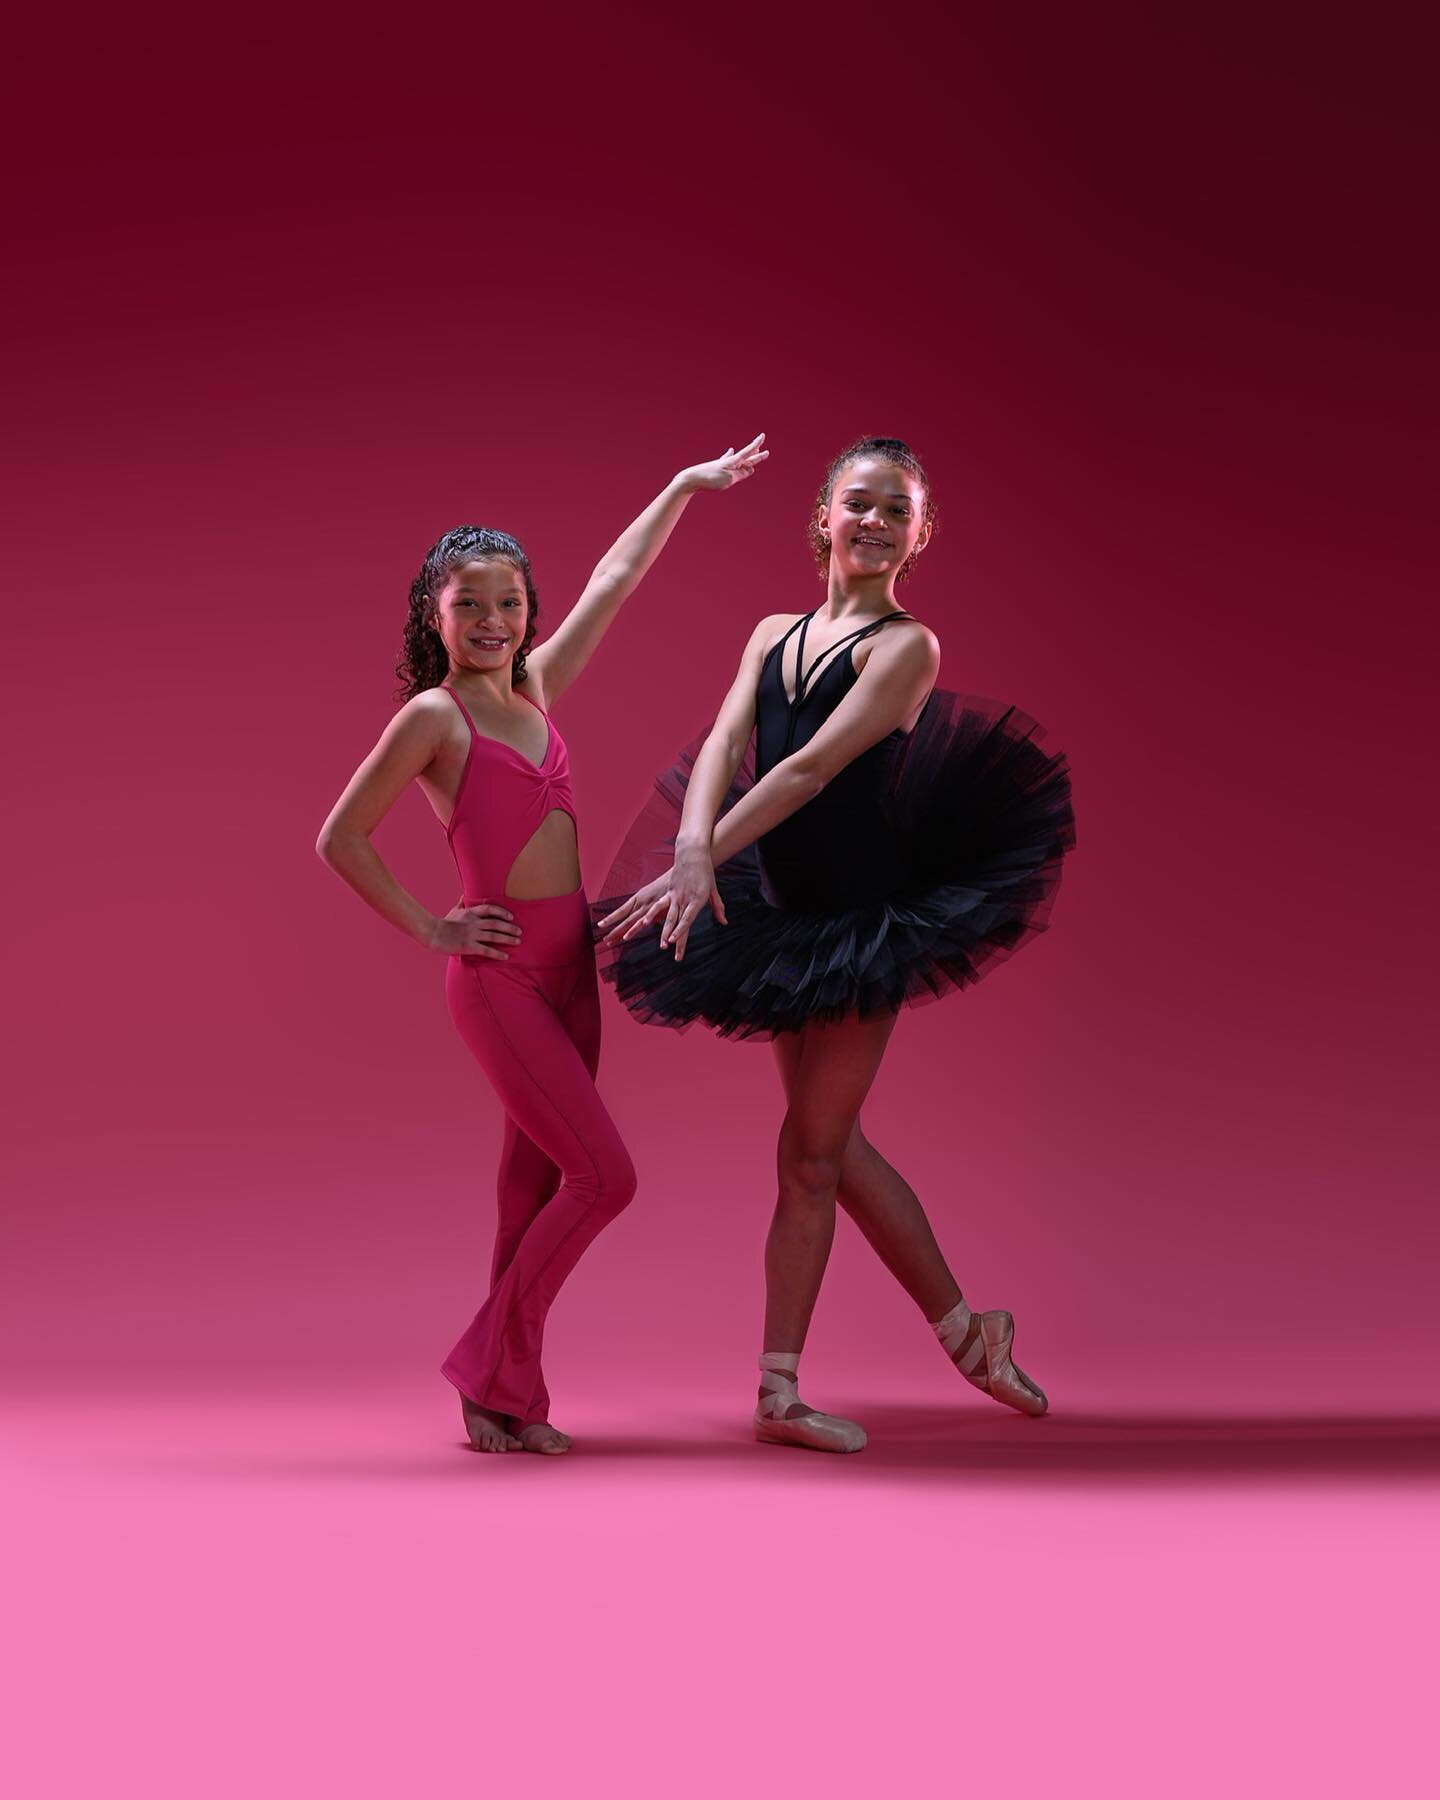 Sister Goals! 😍 How adorable are Jasmine and Jade!! ❤️ @jasandjadedance // 2023 
_________________________________________
#candidlycreated #franciscoestevezphotography #photoshoot #balletdancer #photography #balletpost #artist #ballerina #balletpho